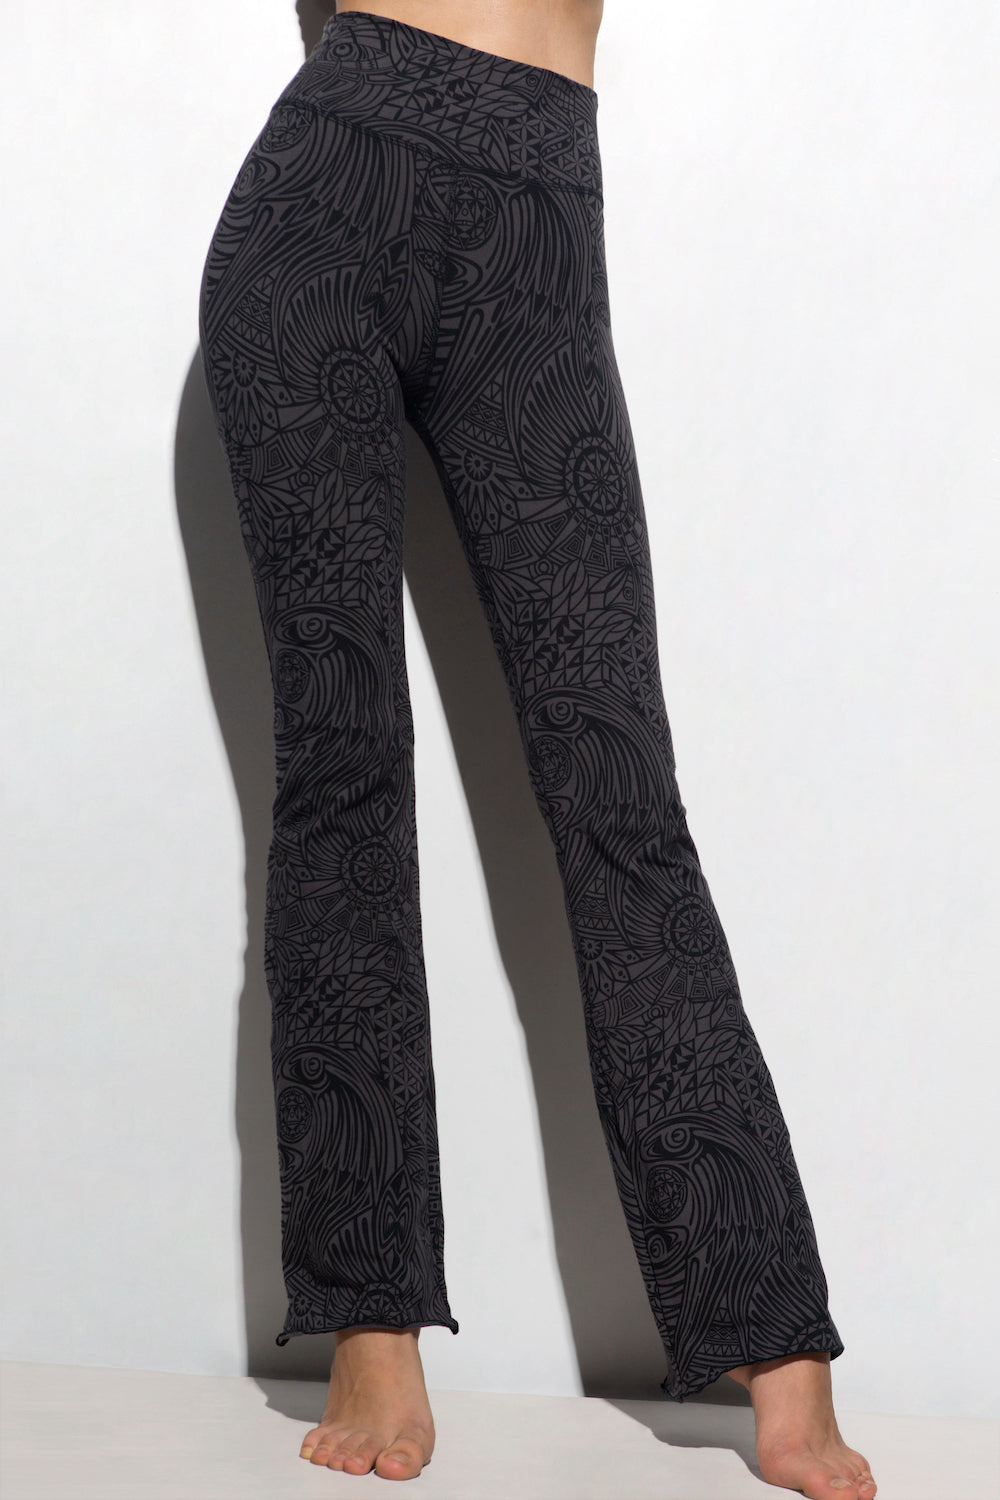 Flare Leggings High Waisted Paisley Black & White NWT sz XL 🖤🤍 SOFT